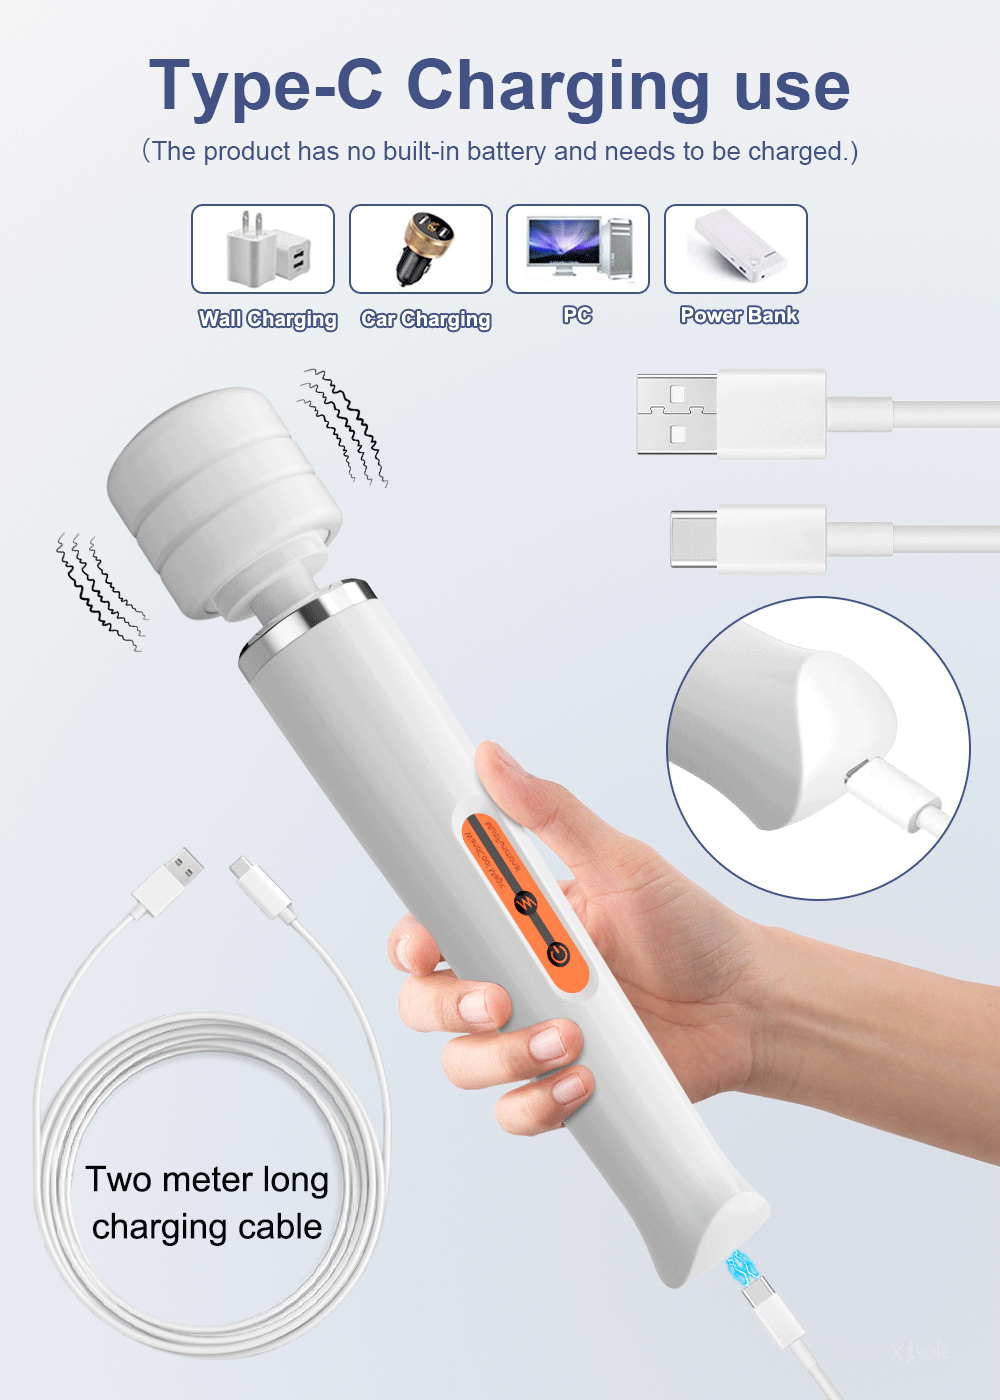 Magic AV Wand - USB Vibrator for Massage and Clit Stimulation